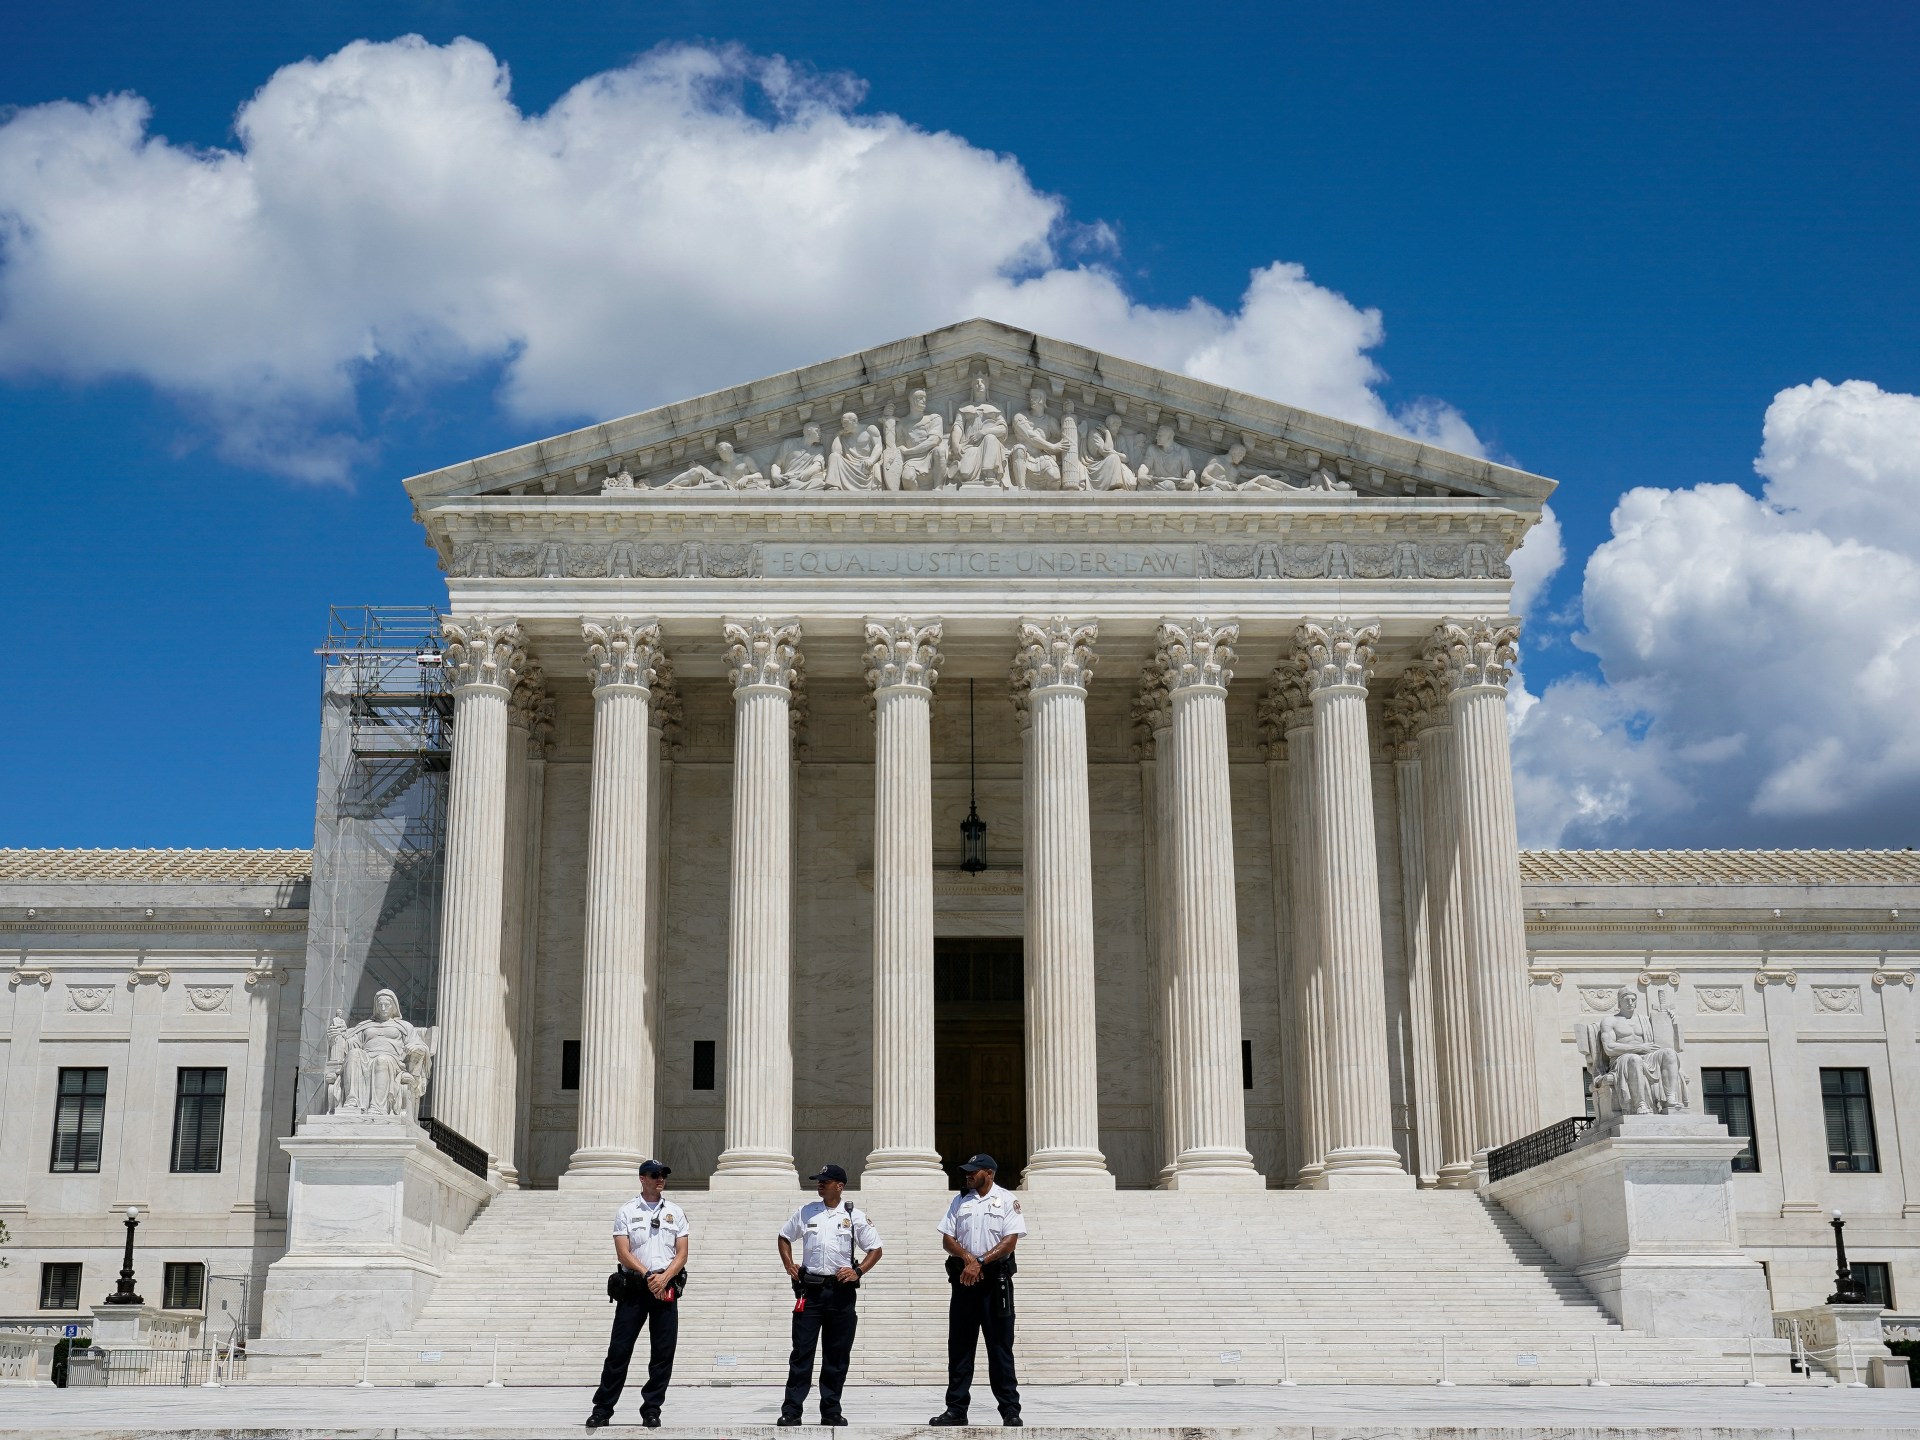 US Supreme Court weakens federal regulators in boost for business